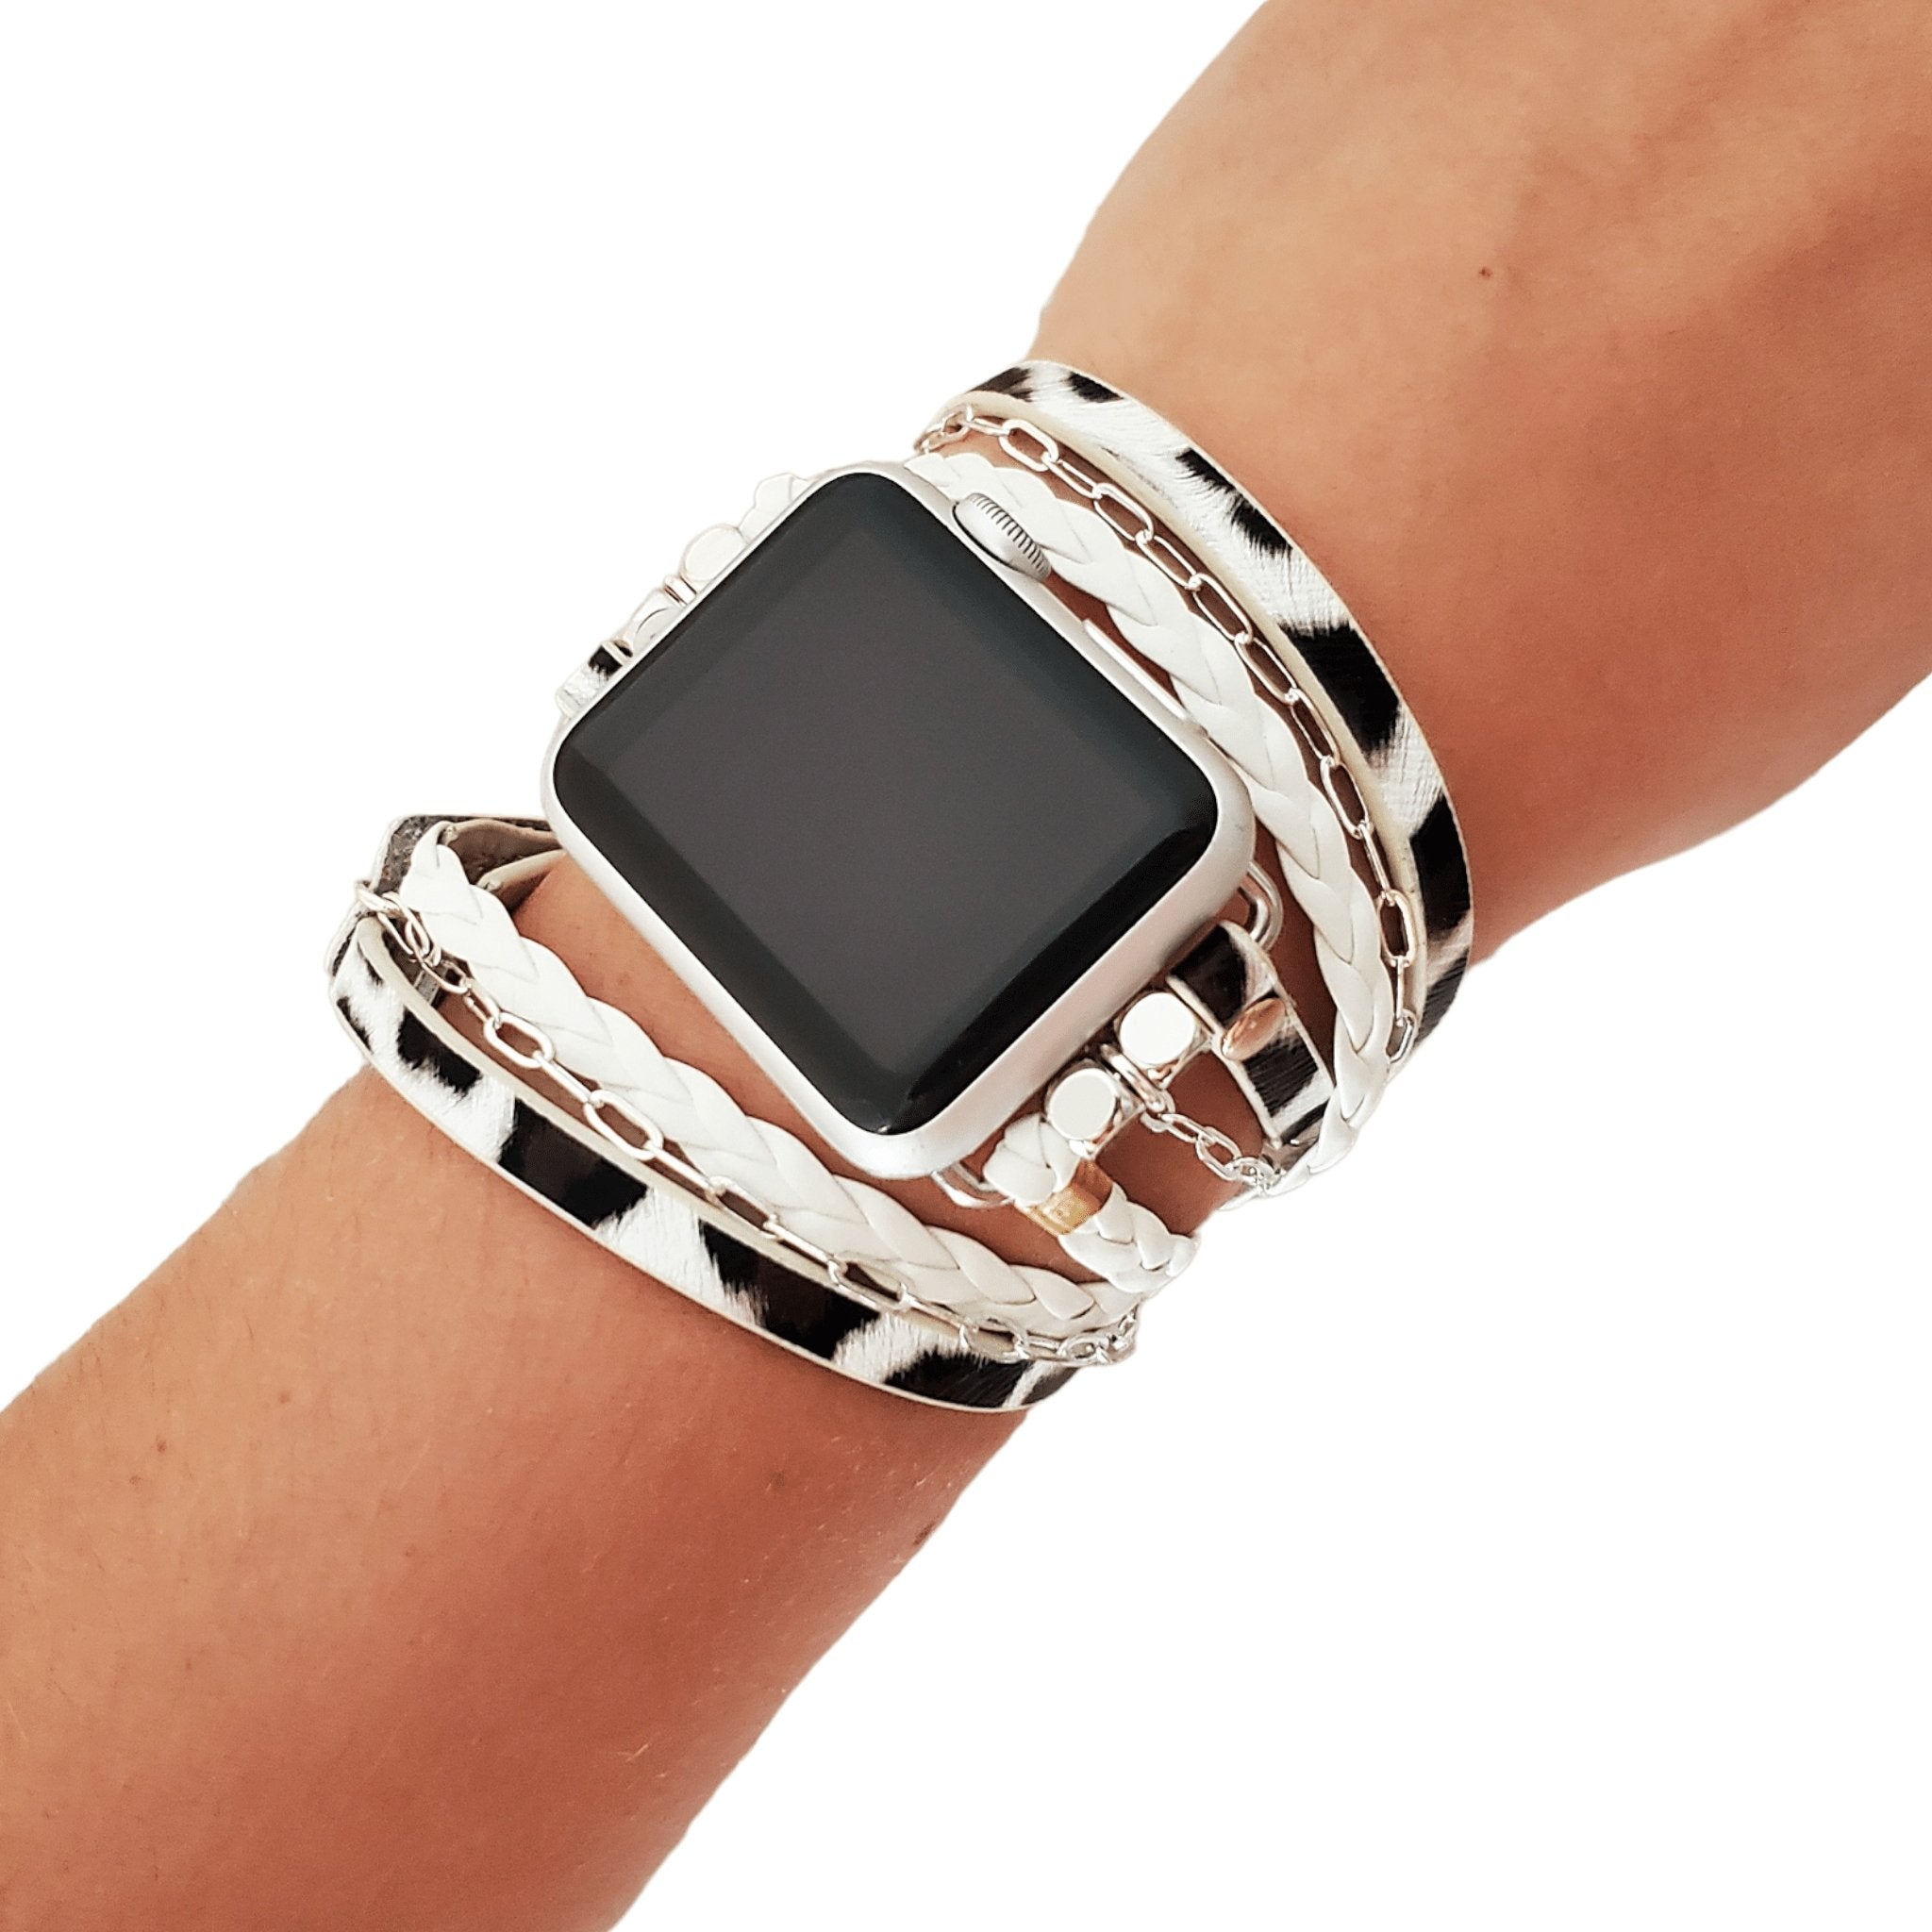 Fashionable wristwear, Unique leopard pattern